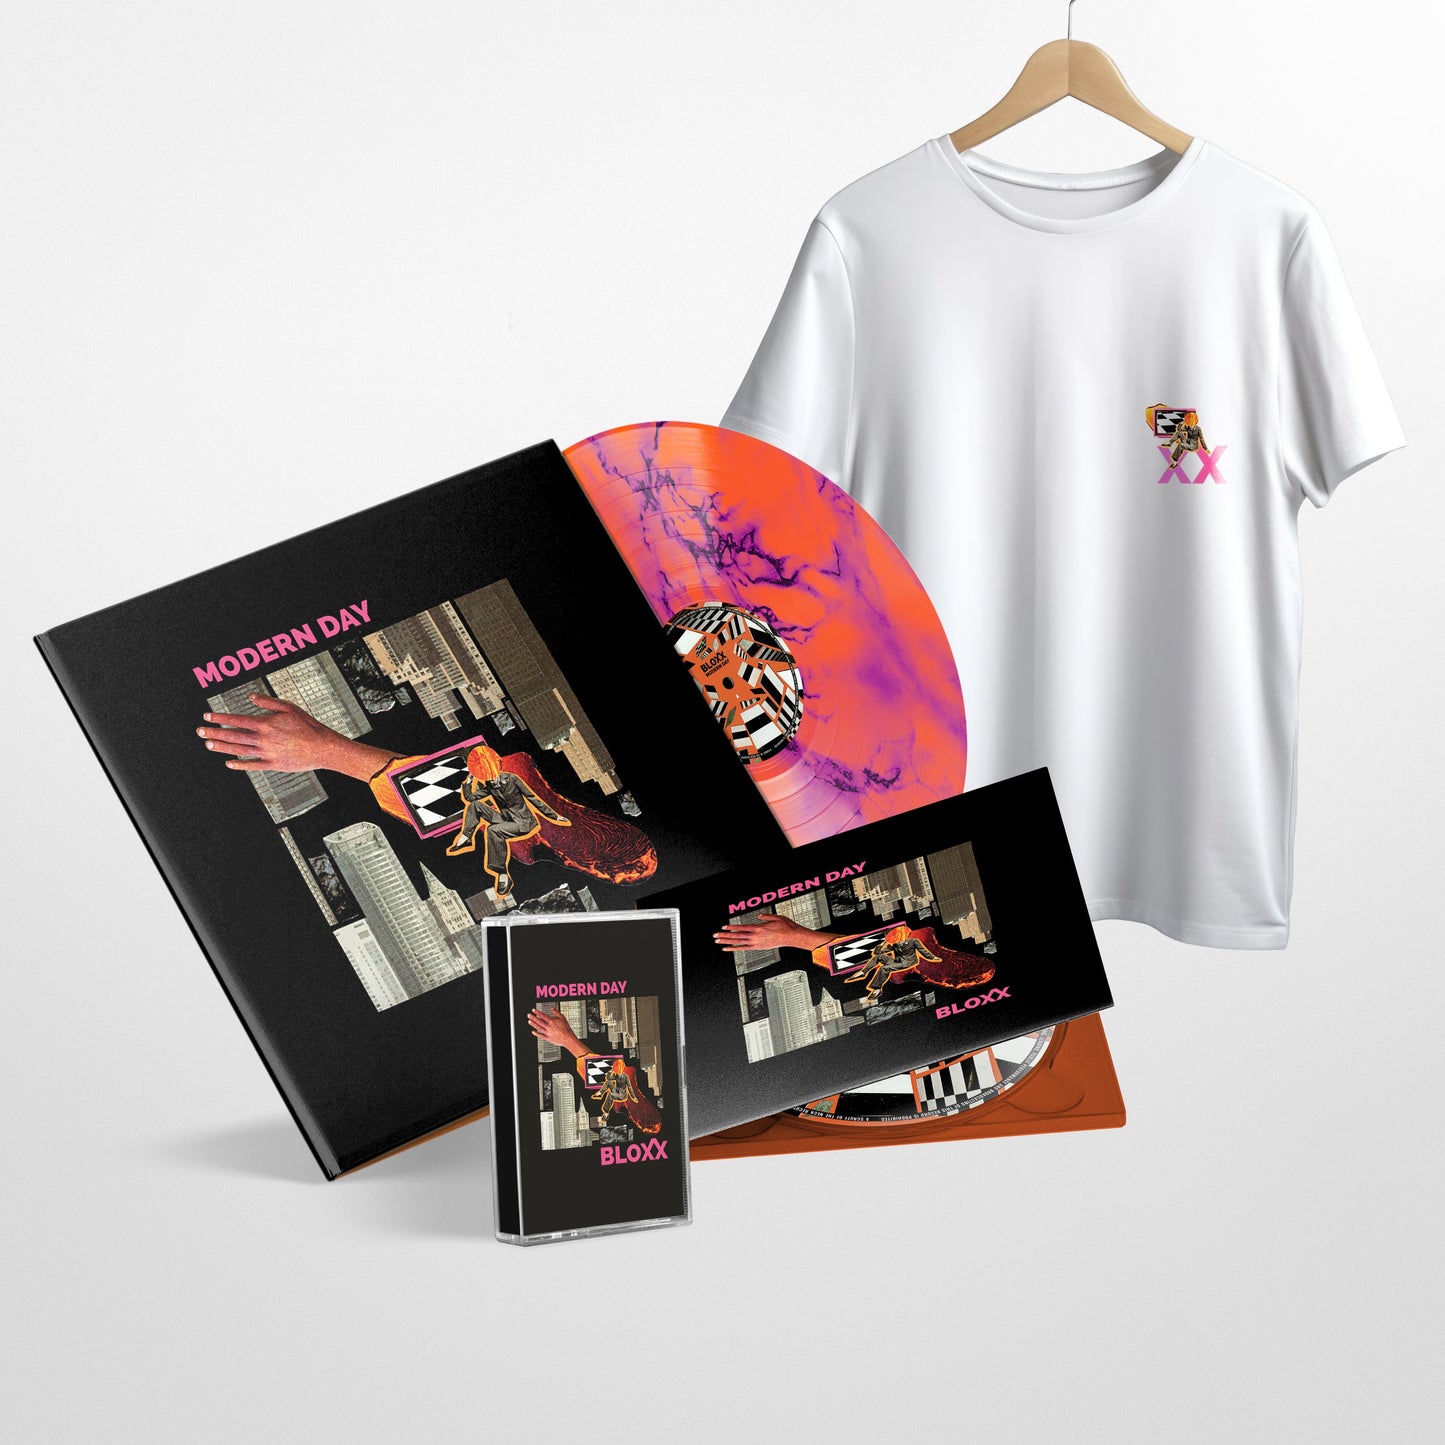 BLOXX - 'Modern Day' EP - Bundle - Pink & Orange Marble 12" Vinyl Disc + CD + Cassette + T-Shirt